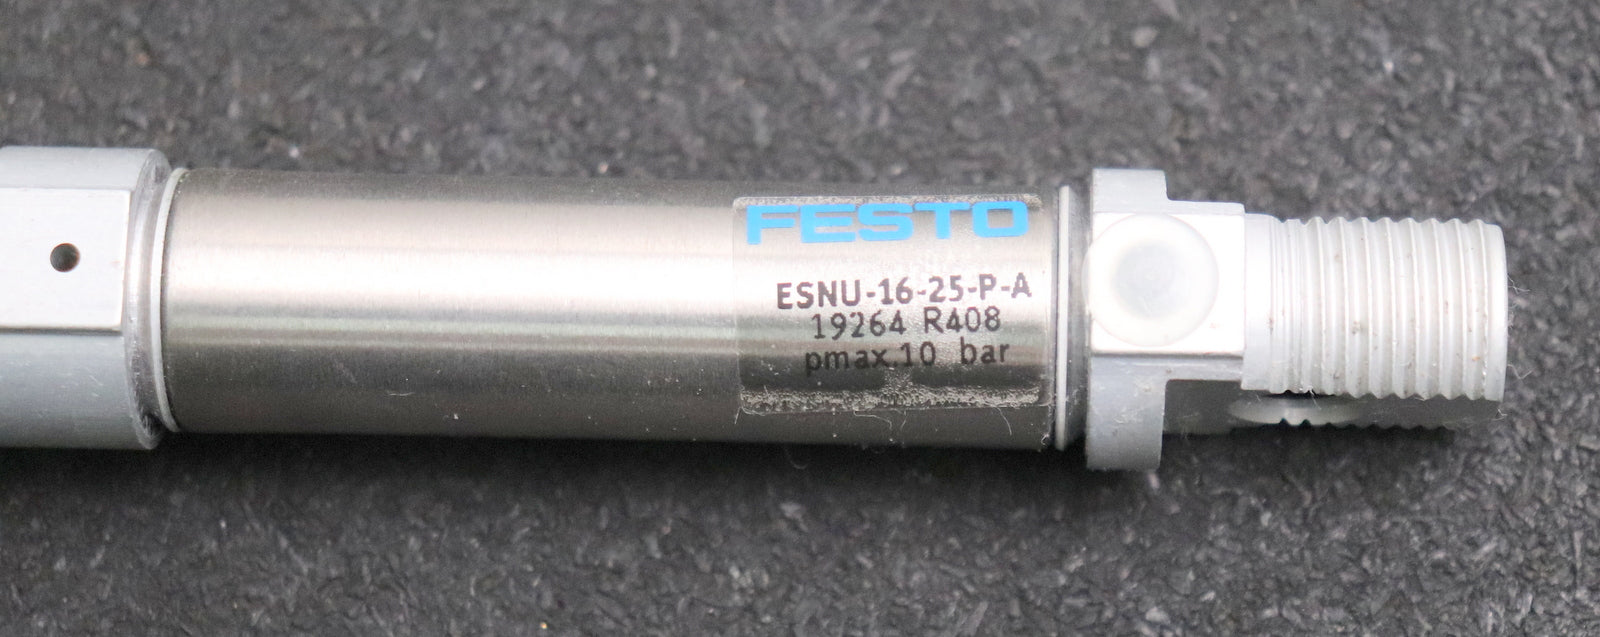 Bild des Artikels FESTO-Rundzylinder-ESNU-16-25-P-A-Mat.Nr.-19264-Kolben-16mm-Hub-25mm-Pmax-10bar